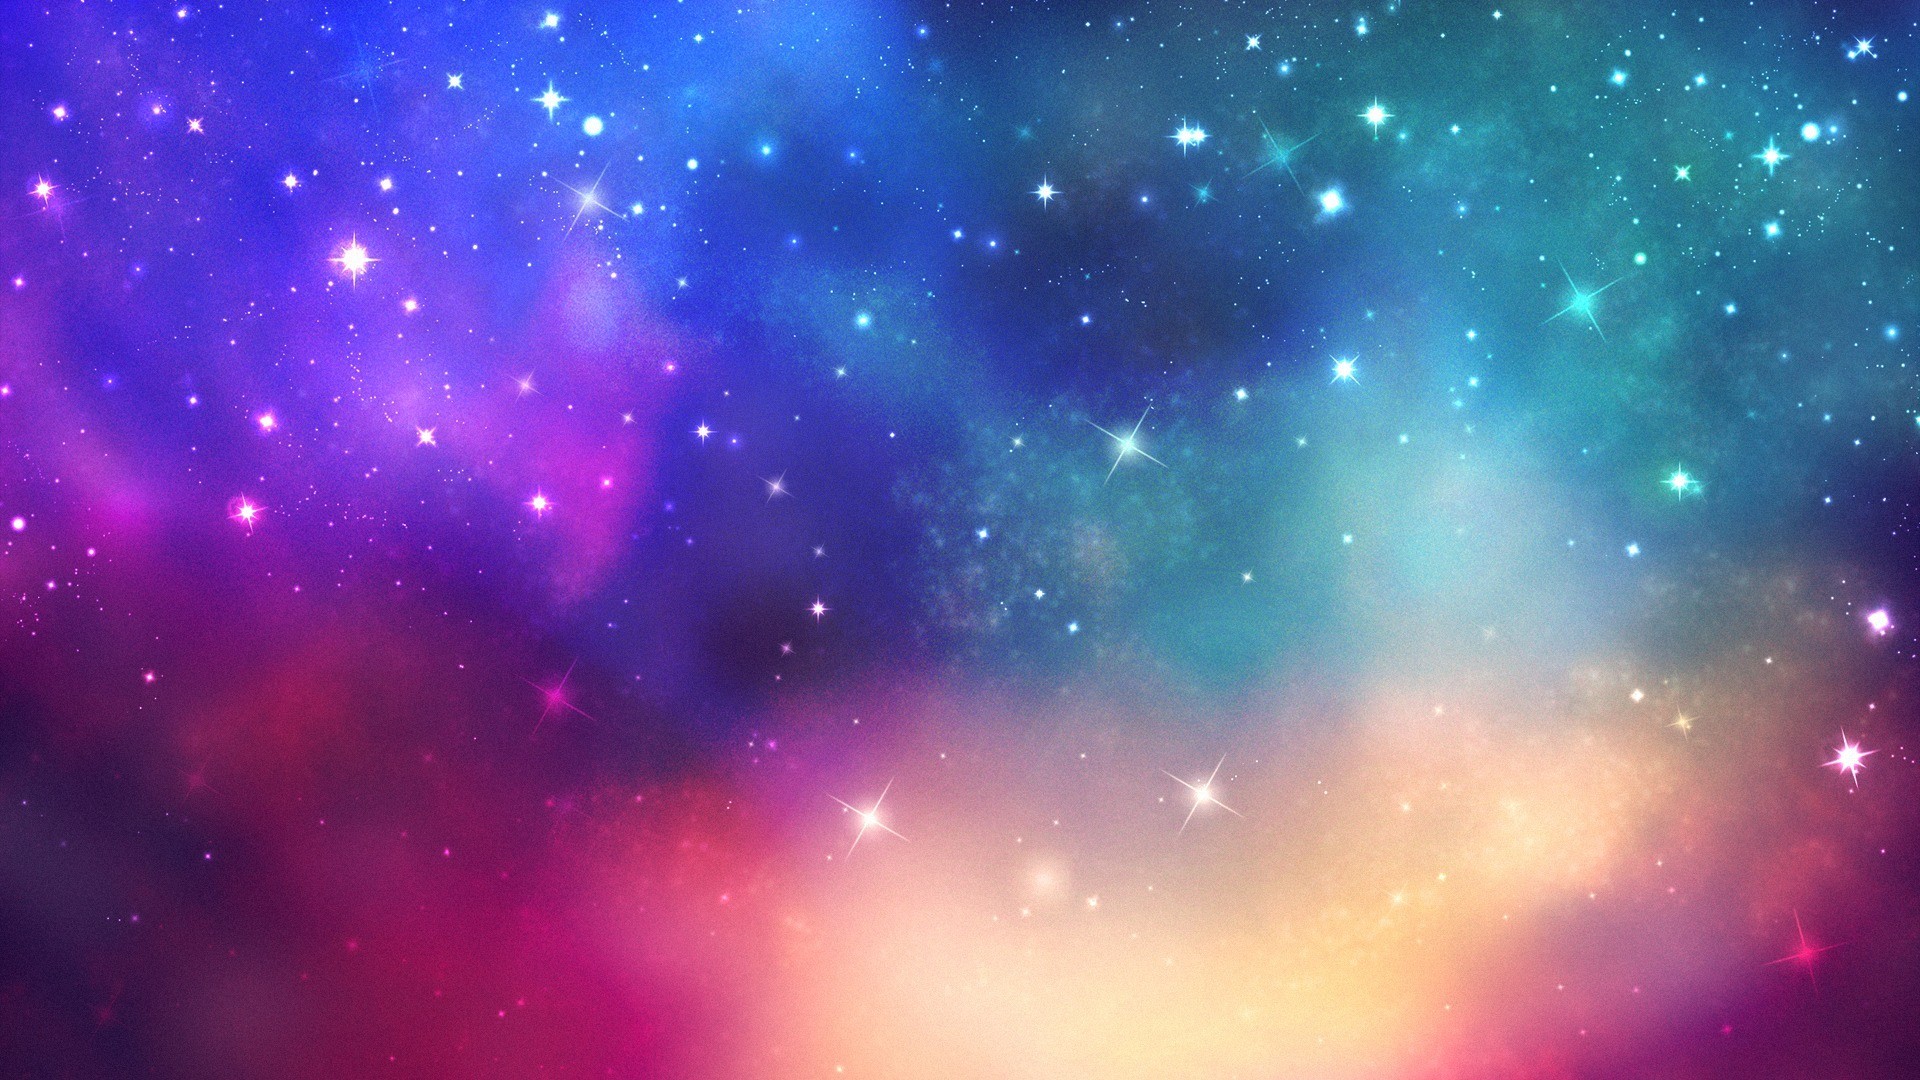 1920x1080 Colorful Star Galaxy Wallpaper High Definition mcoceanacademiccom 